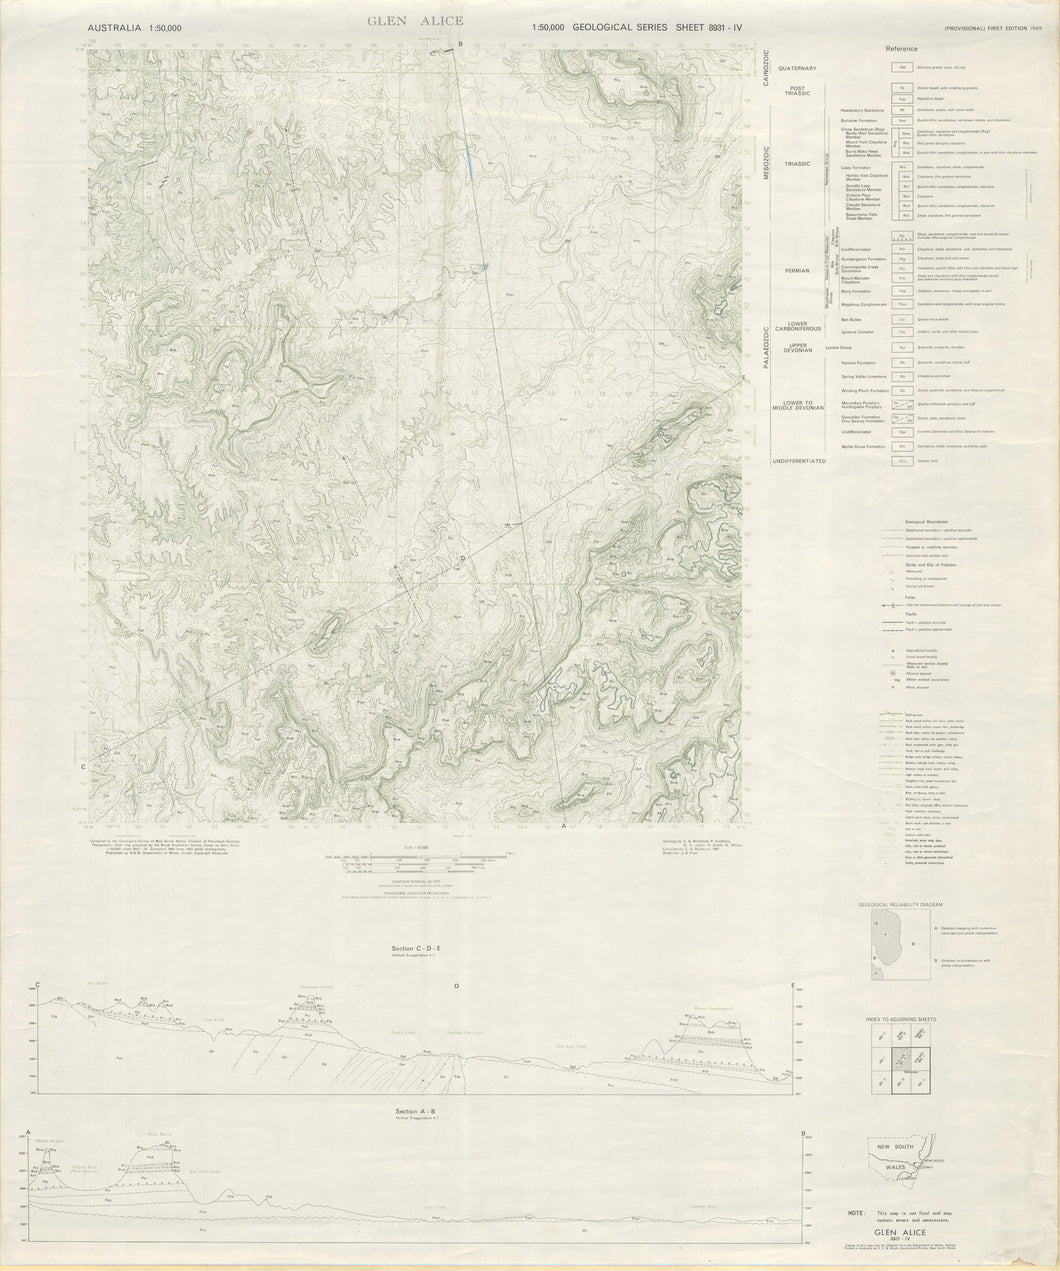 Image of Glen Alice 1:50000 Geological map